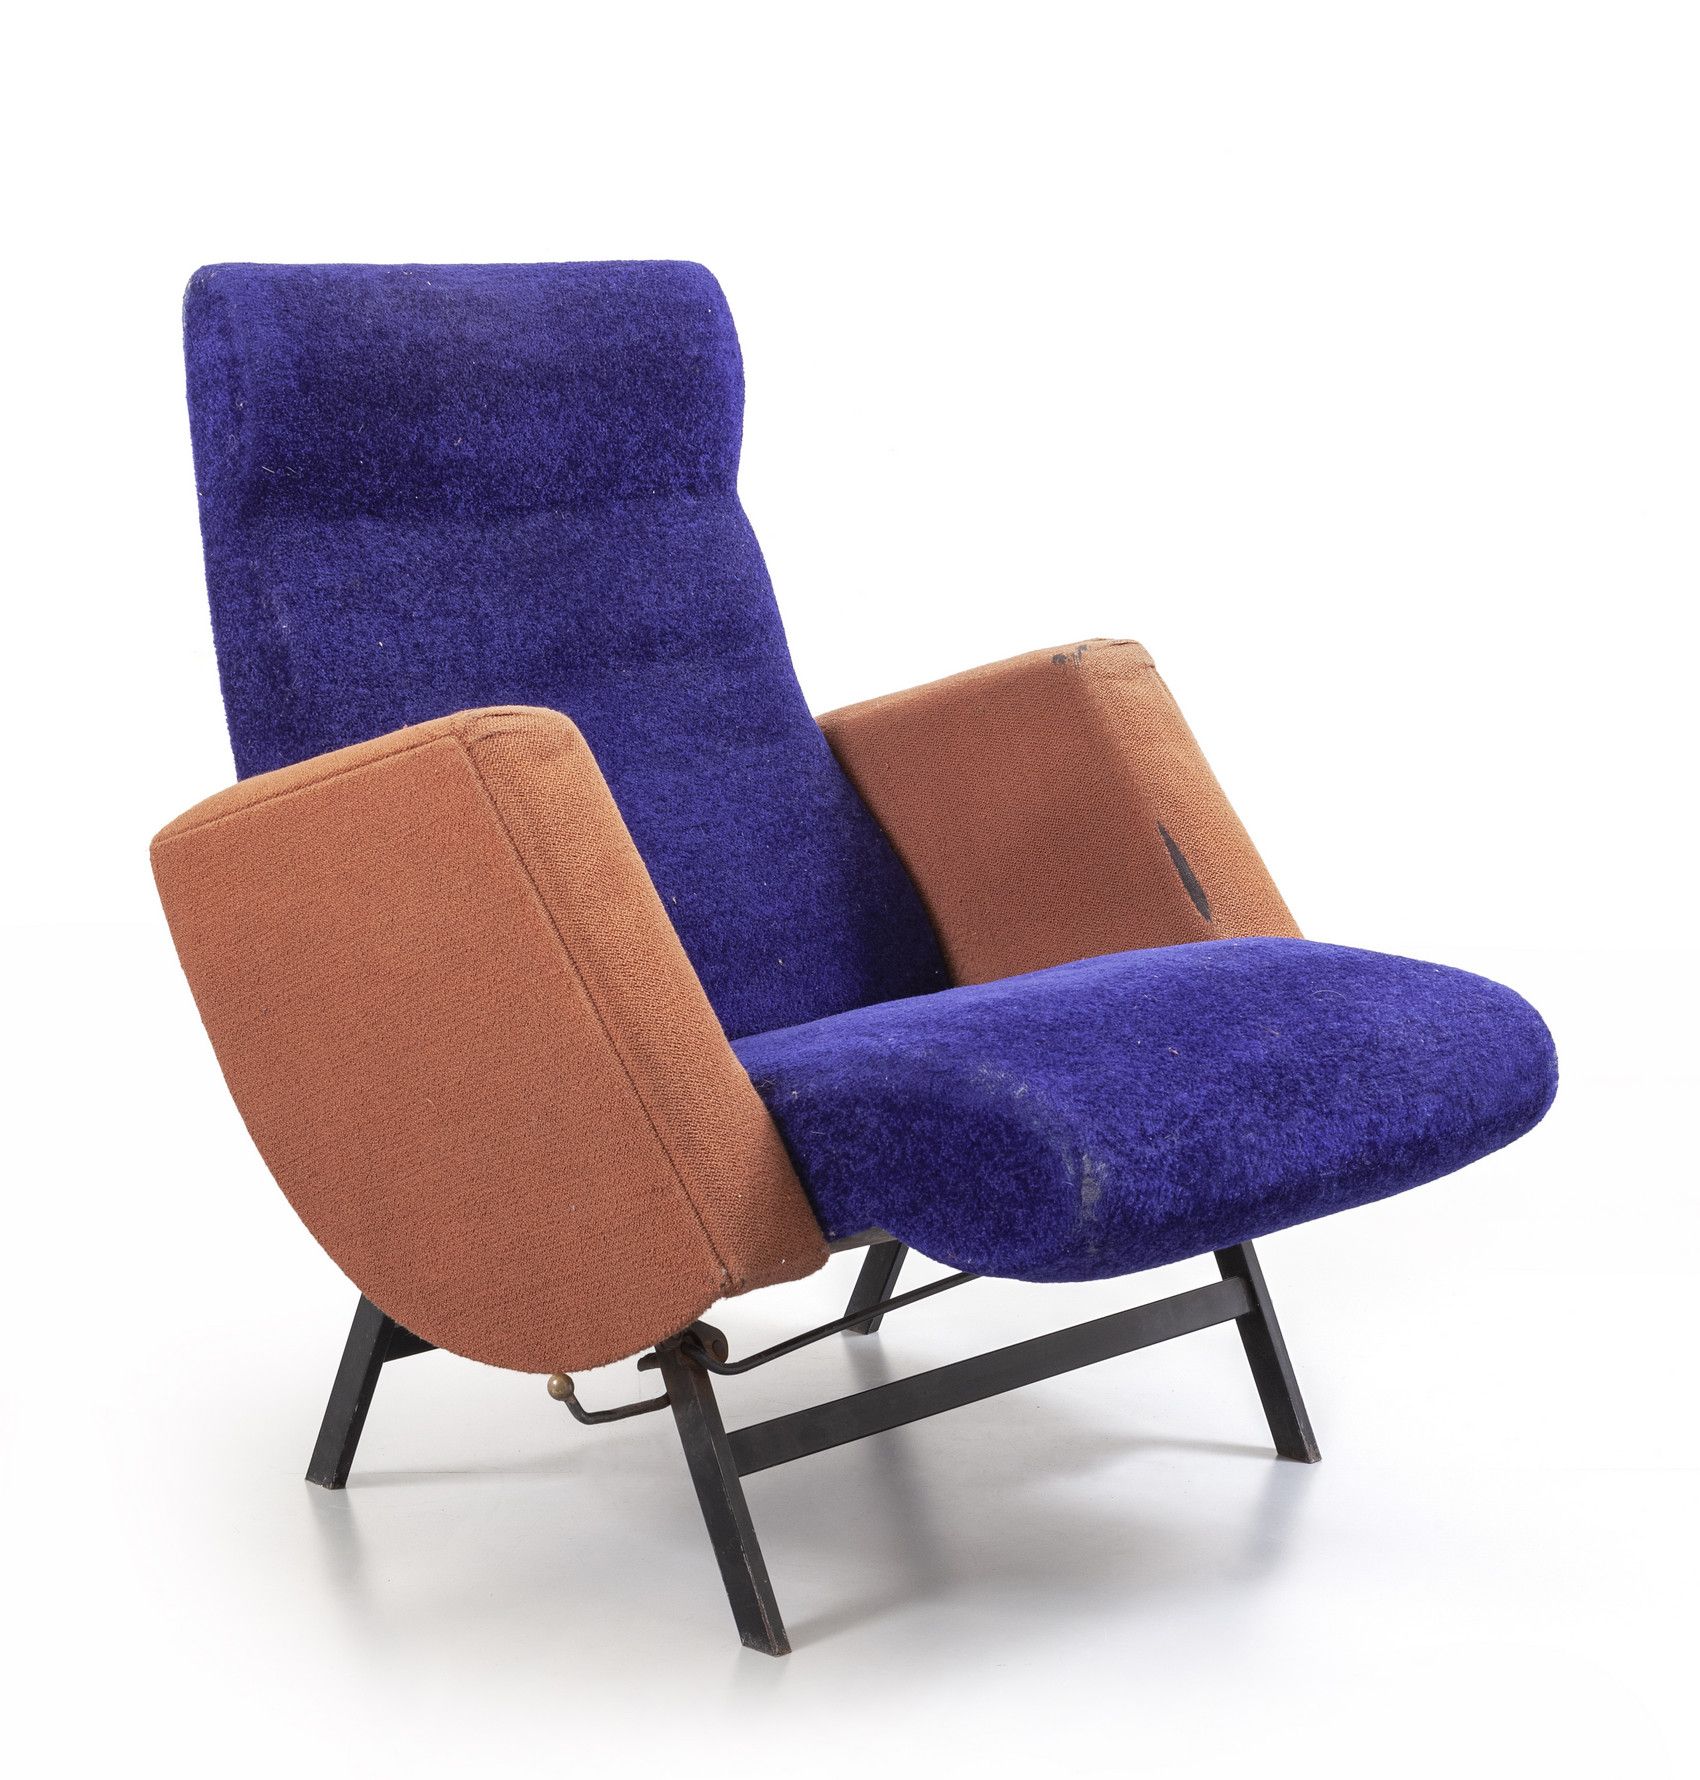 POLTRONA 50年代的躺椅。
喷漆的钢，软垫部分用织物覆盖。
在扶手椅上的尺寸：高94厘米，宽70，深78；
在躺椅上的尺寸：高75厘米，宽70，深100&hellip;